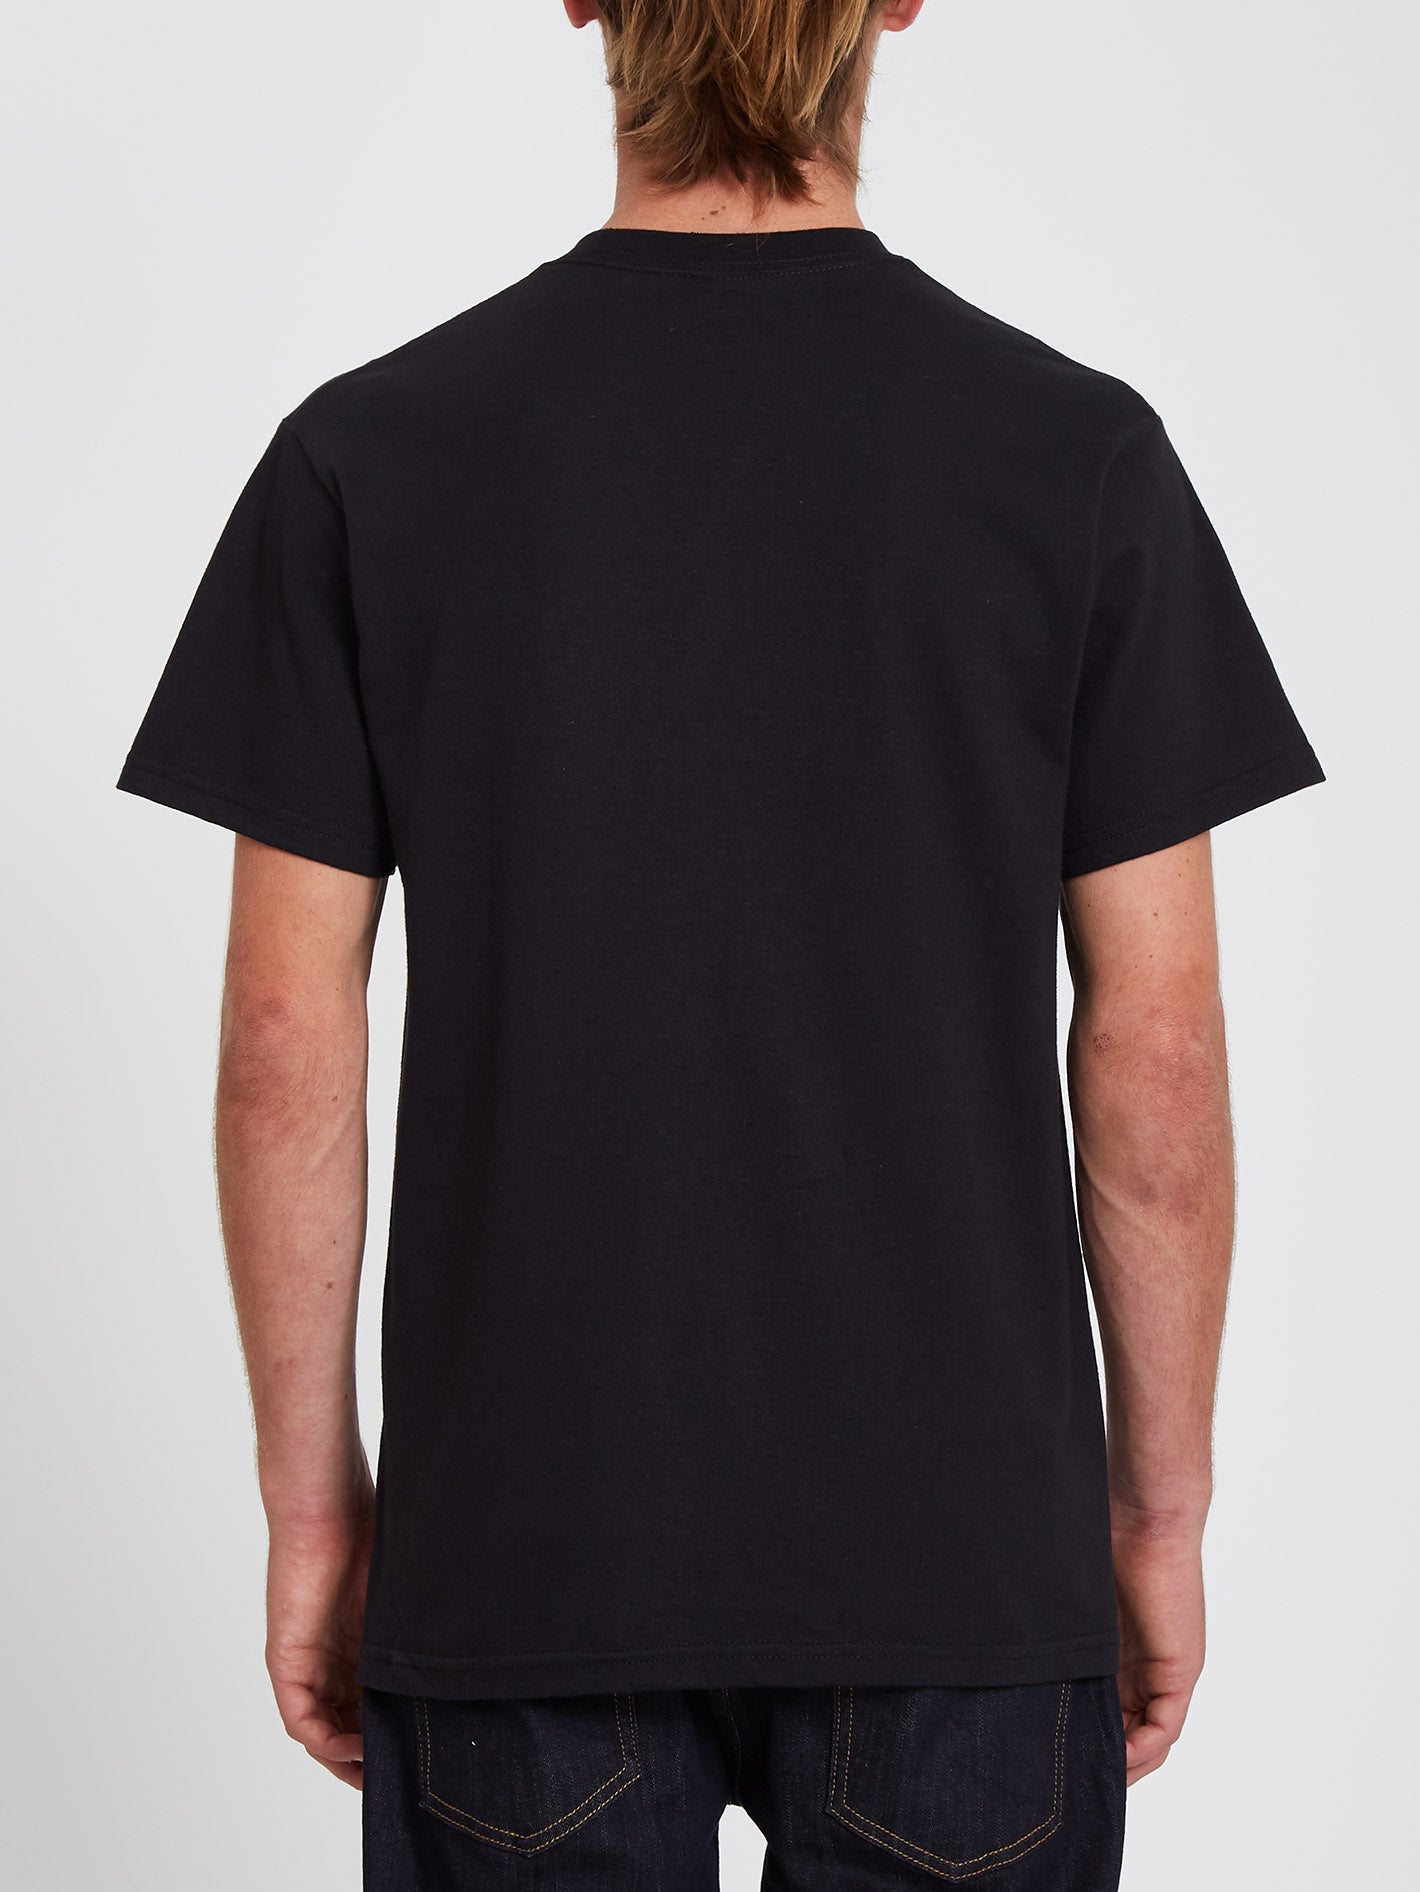 LV LOVE Black T-Shirt – Ironic Lux